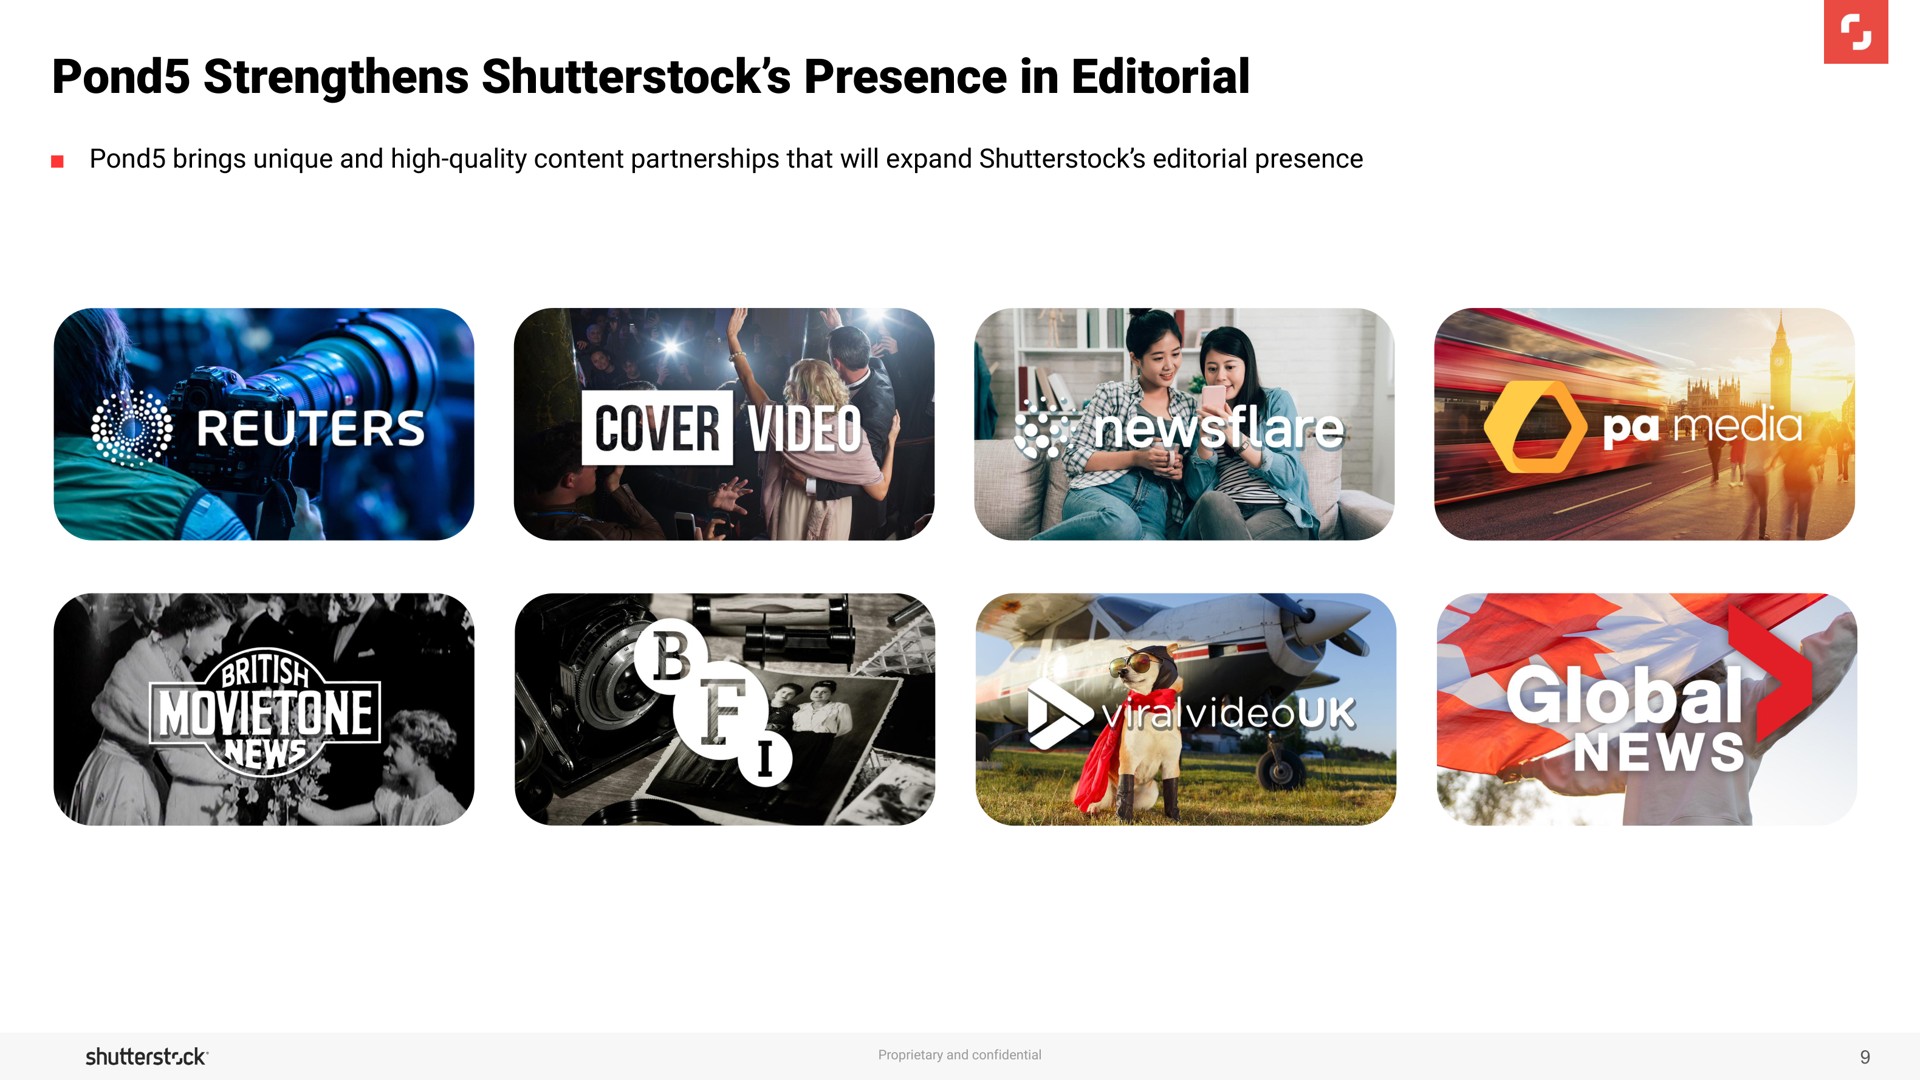 pond strengthens presence in editorial | Shutterstock